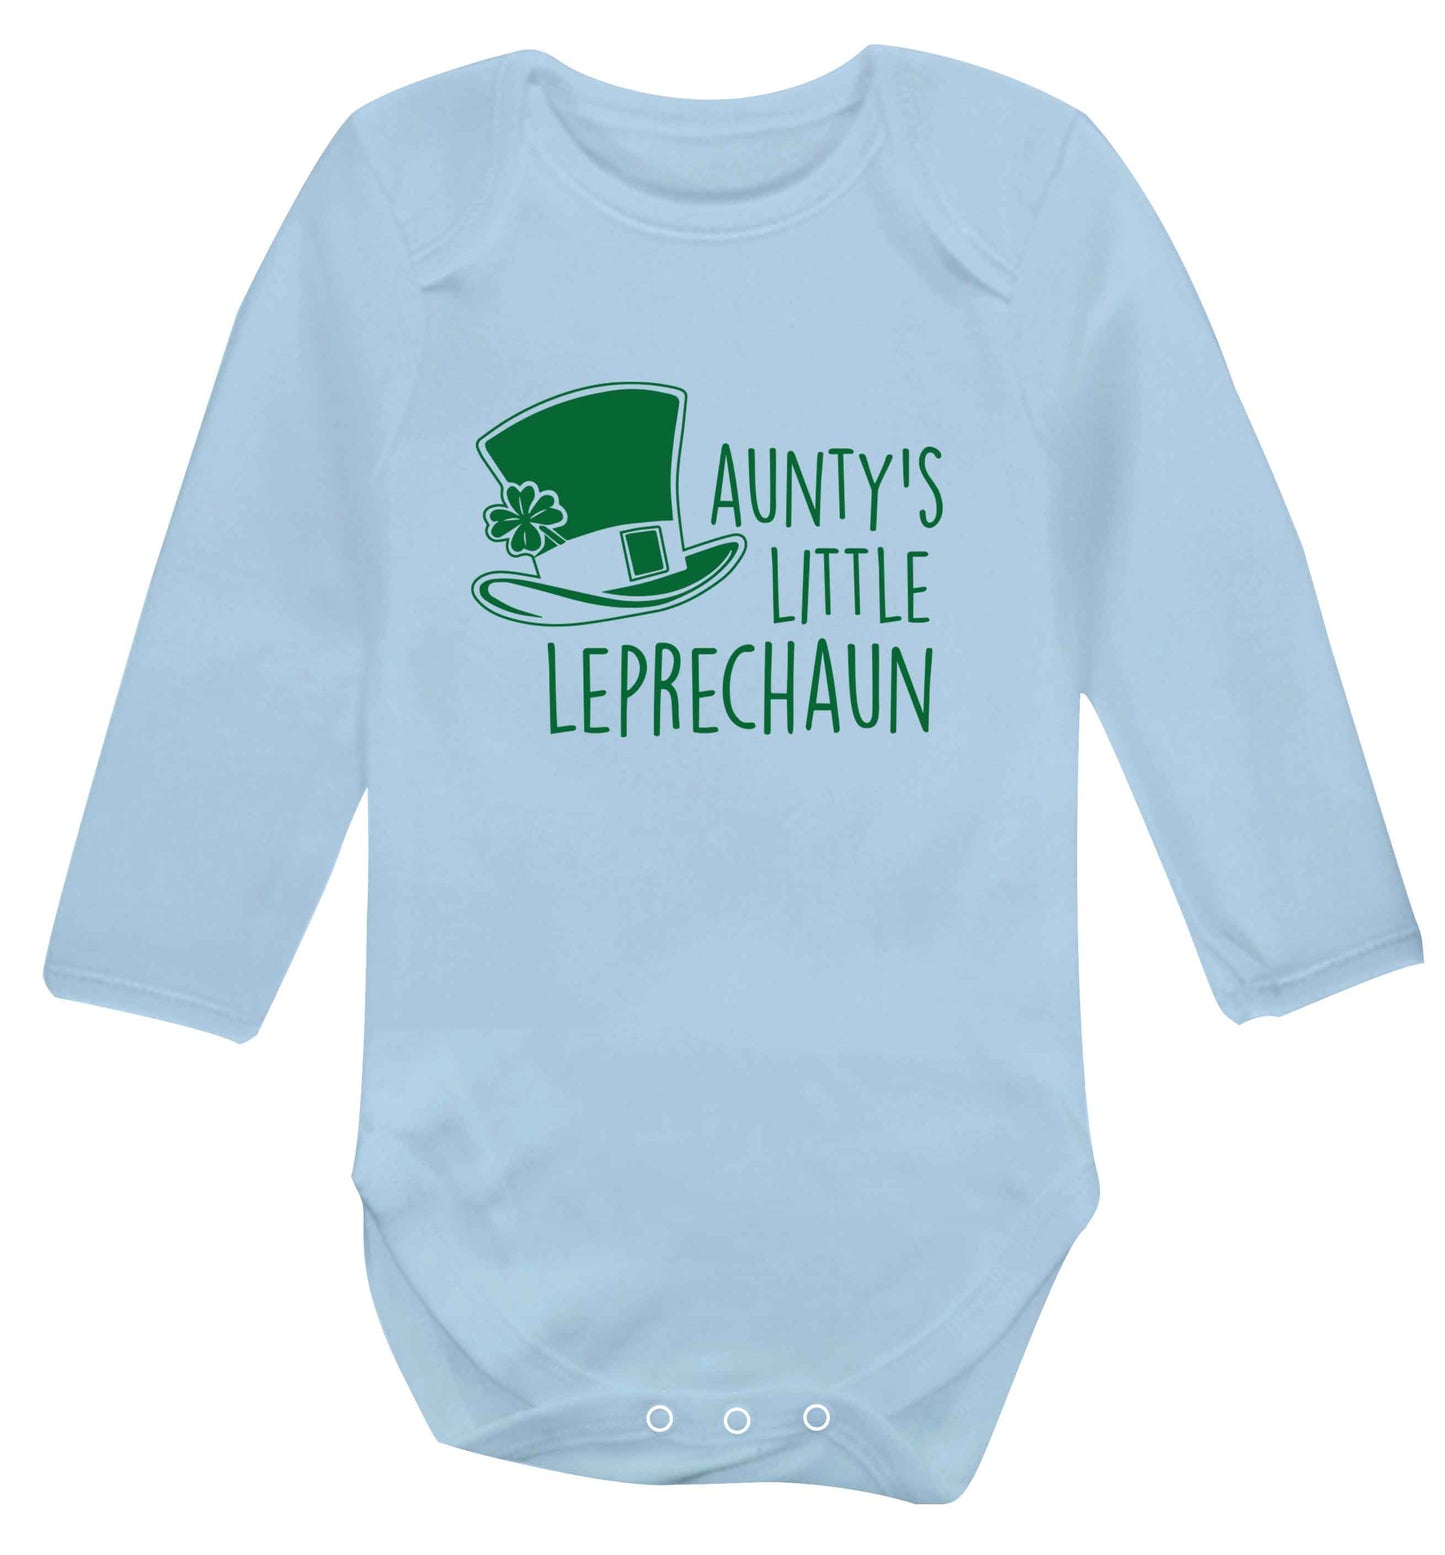 Aunty's little leprechaun baby vest long sleeved pale blue 6-12 months